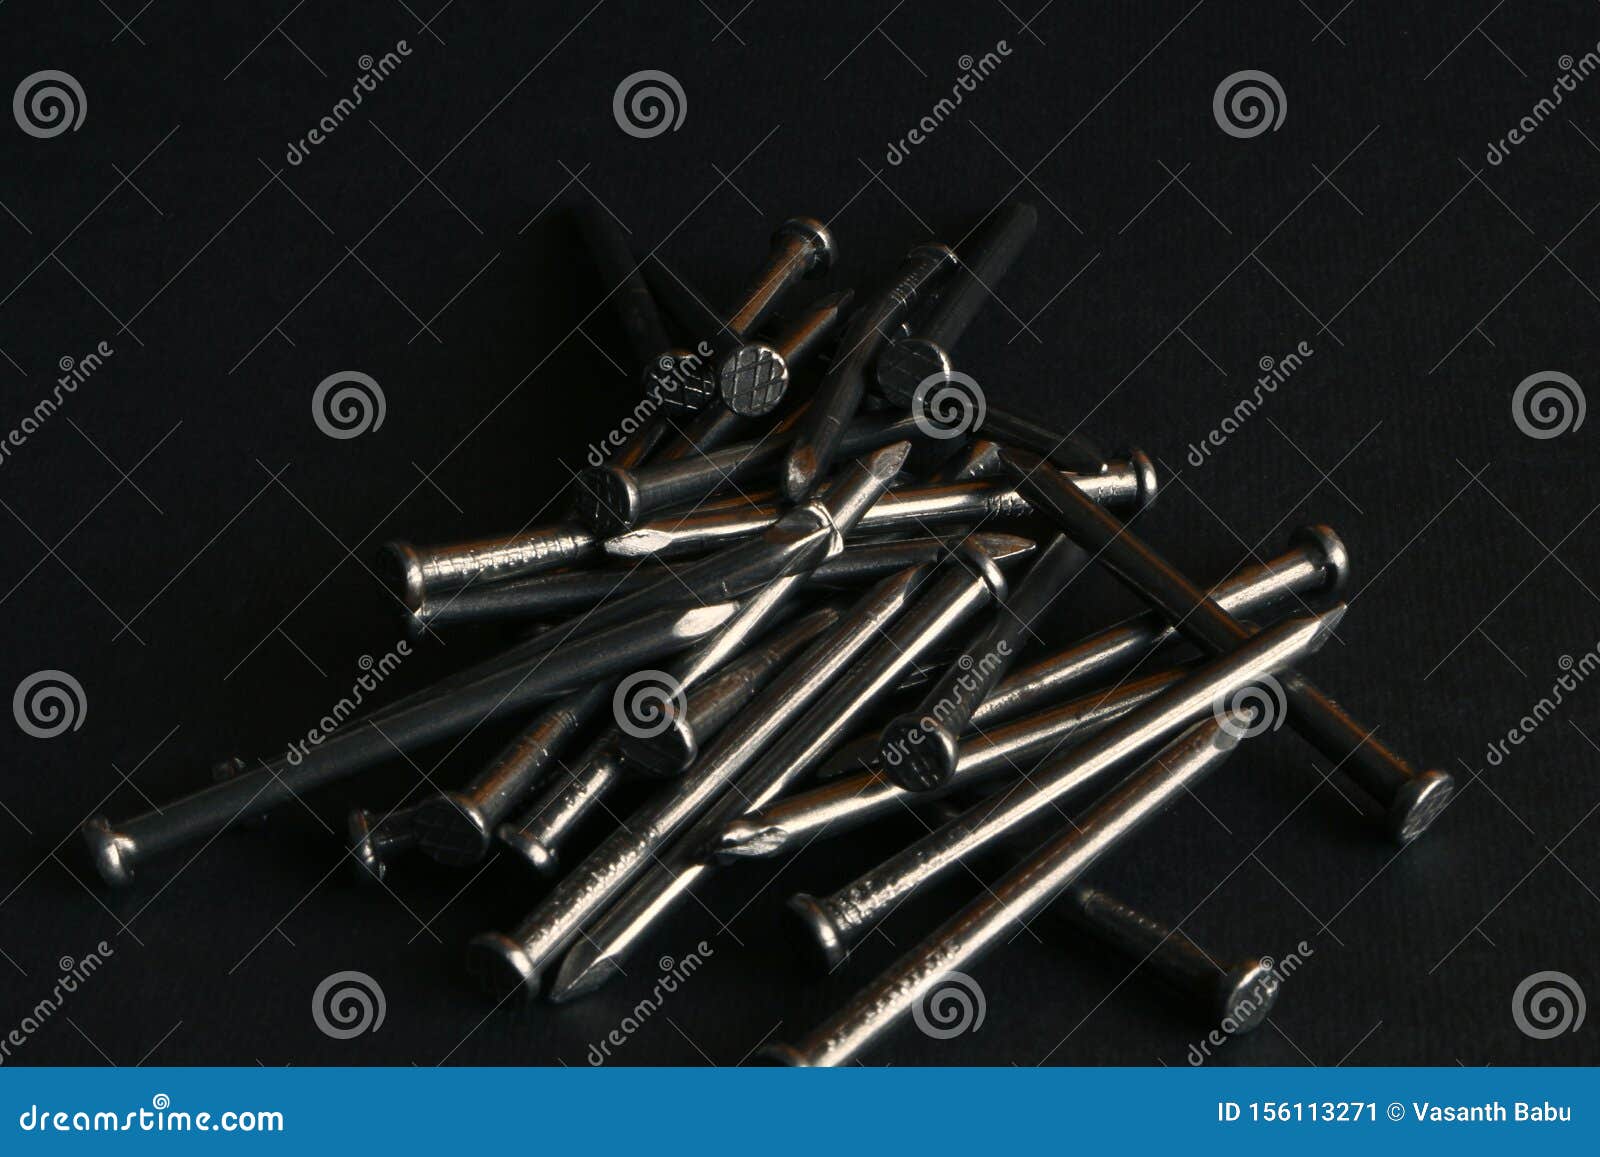 Metallic Iron Nails in Black Background Stock Image - Image of ...